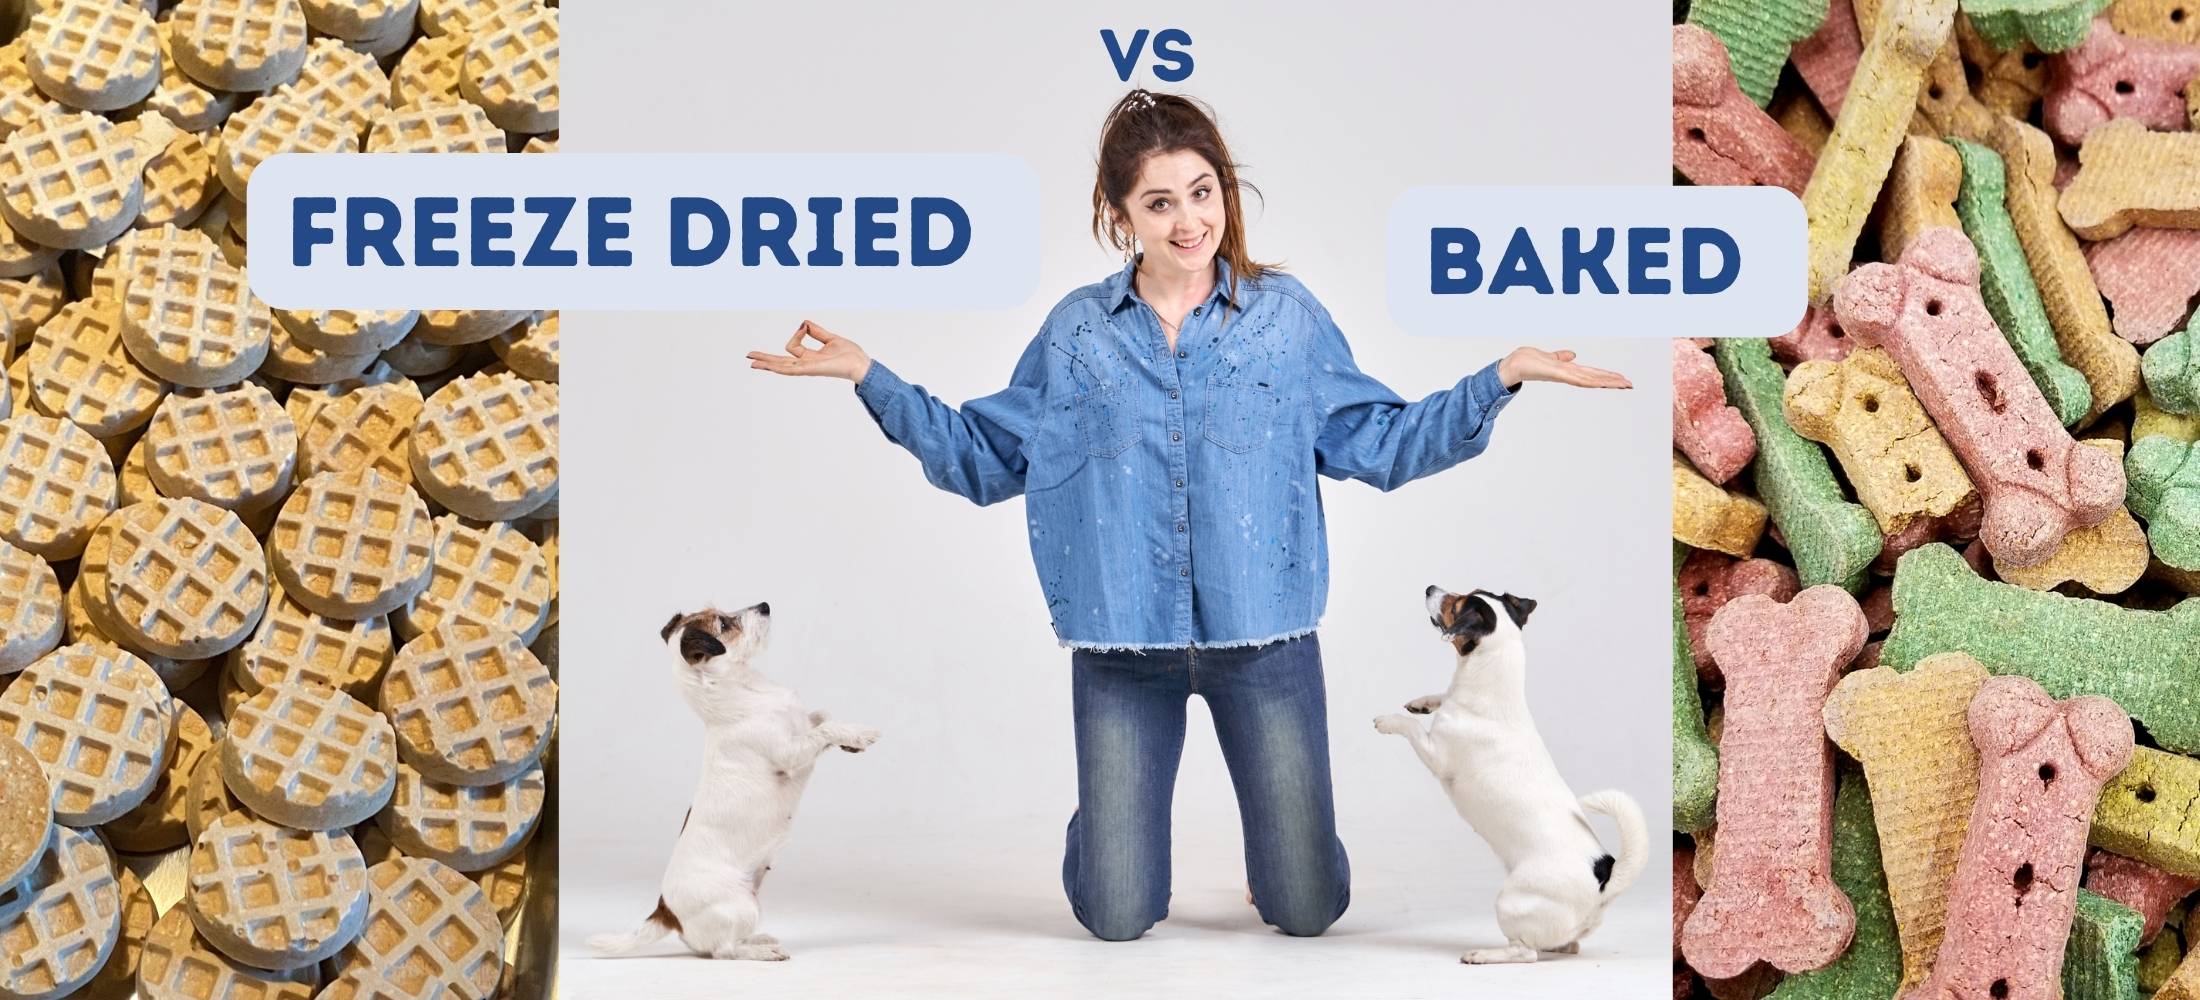 Woman with 2 Jack Russel Terriers debates between freeze dried vs baked dog treats